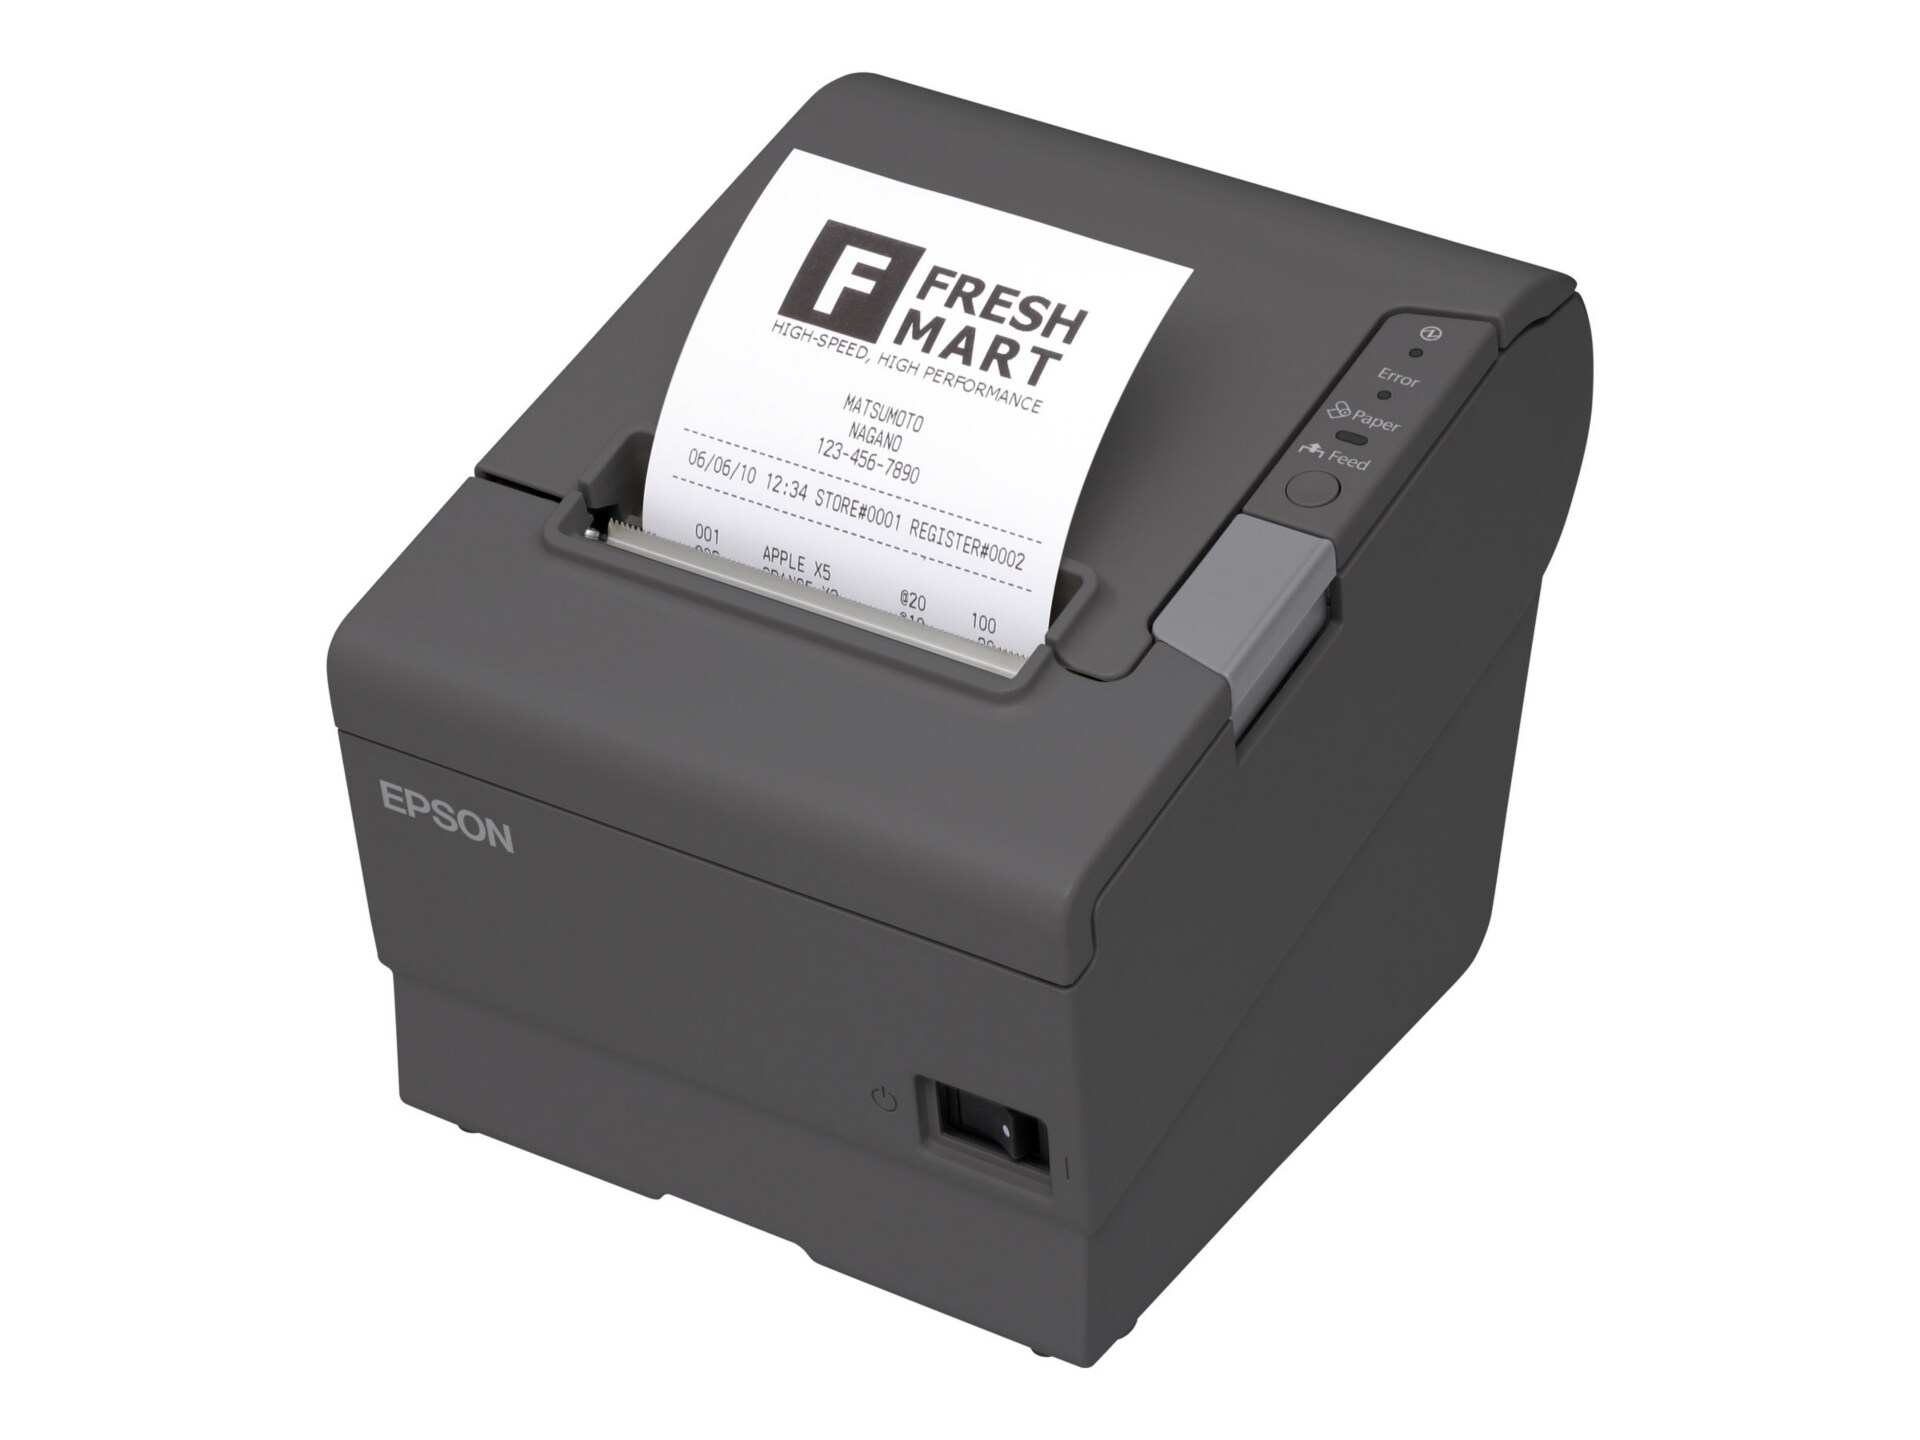 Epson TM-T88V Thermal Receipt Printer